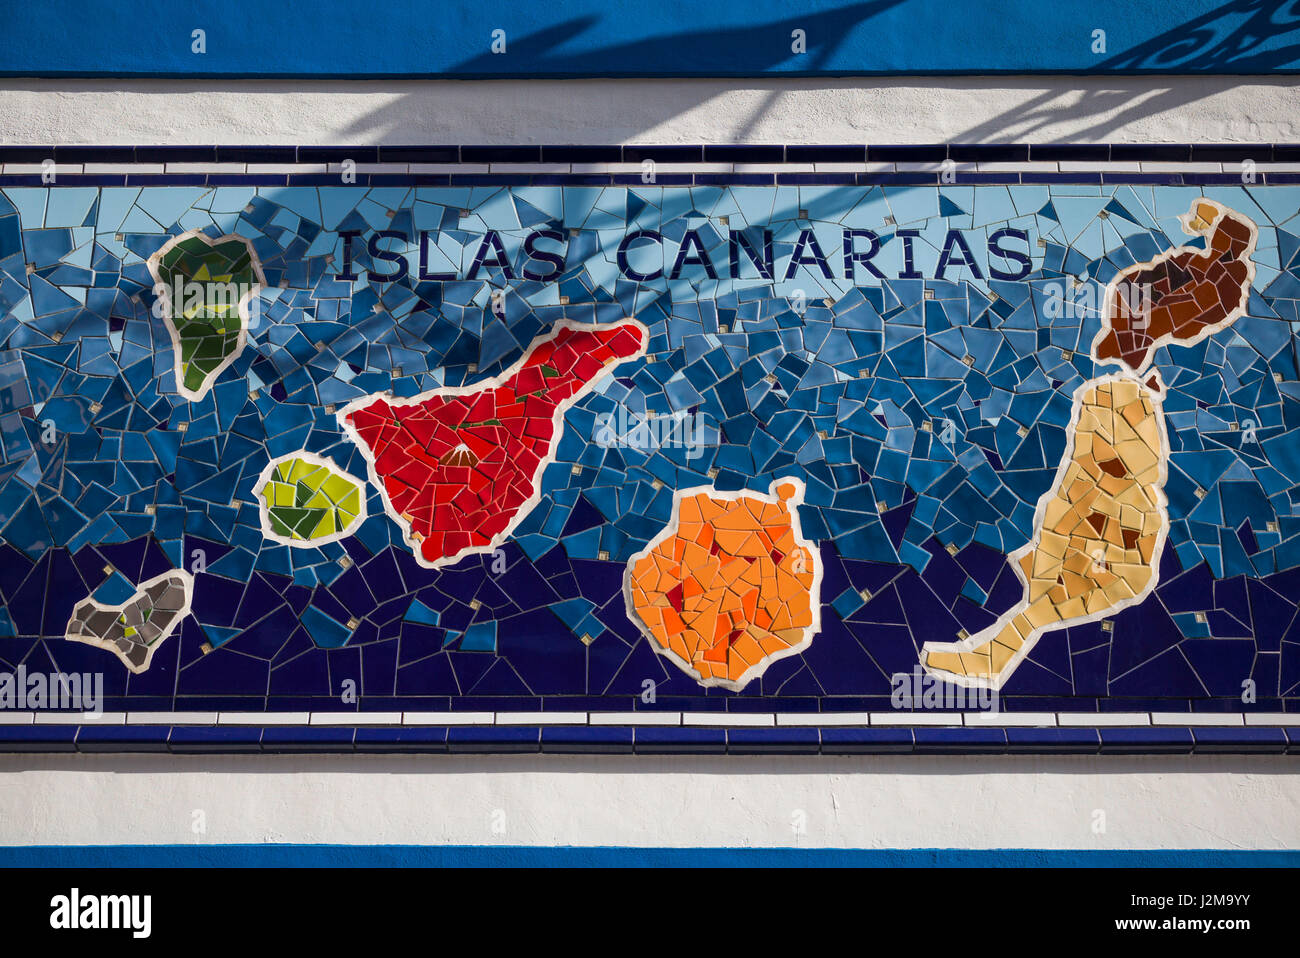 Spain, Canary Islands, Tenerife, Puerto de la Cruz, mural with Canary  Islands map Stock Photo - Alamy